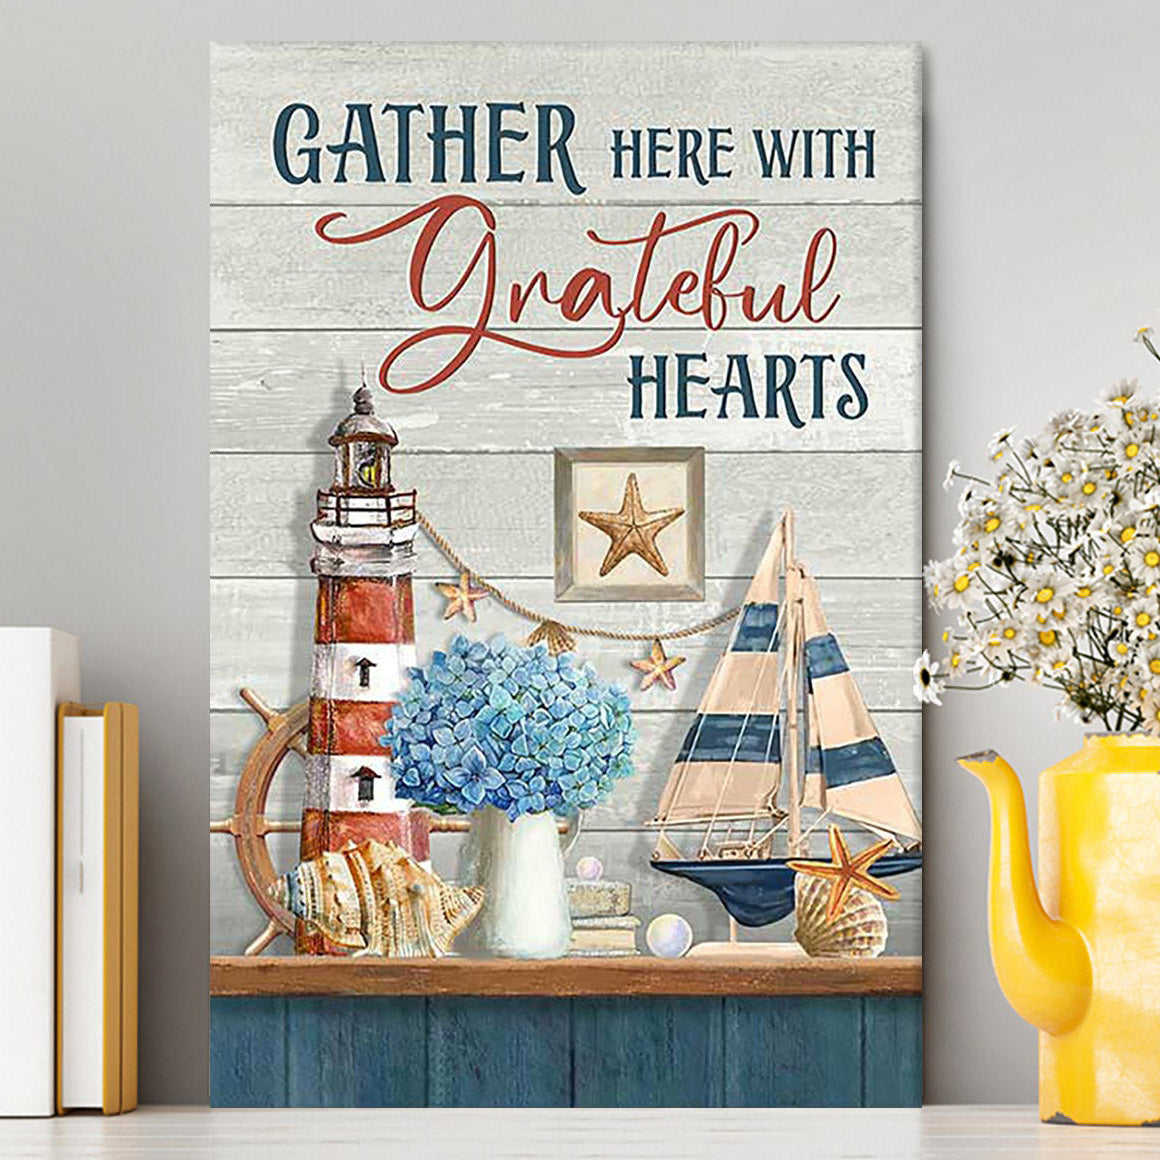 Gather Here With Grateful Hearts Lighthouse Canvas Art - Bible Verse Wall Art - Christian Inspirational Wall Decor